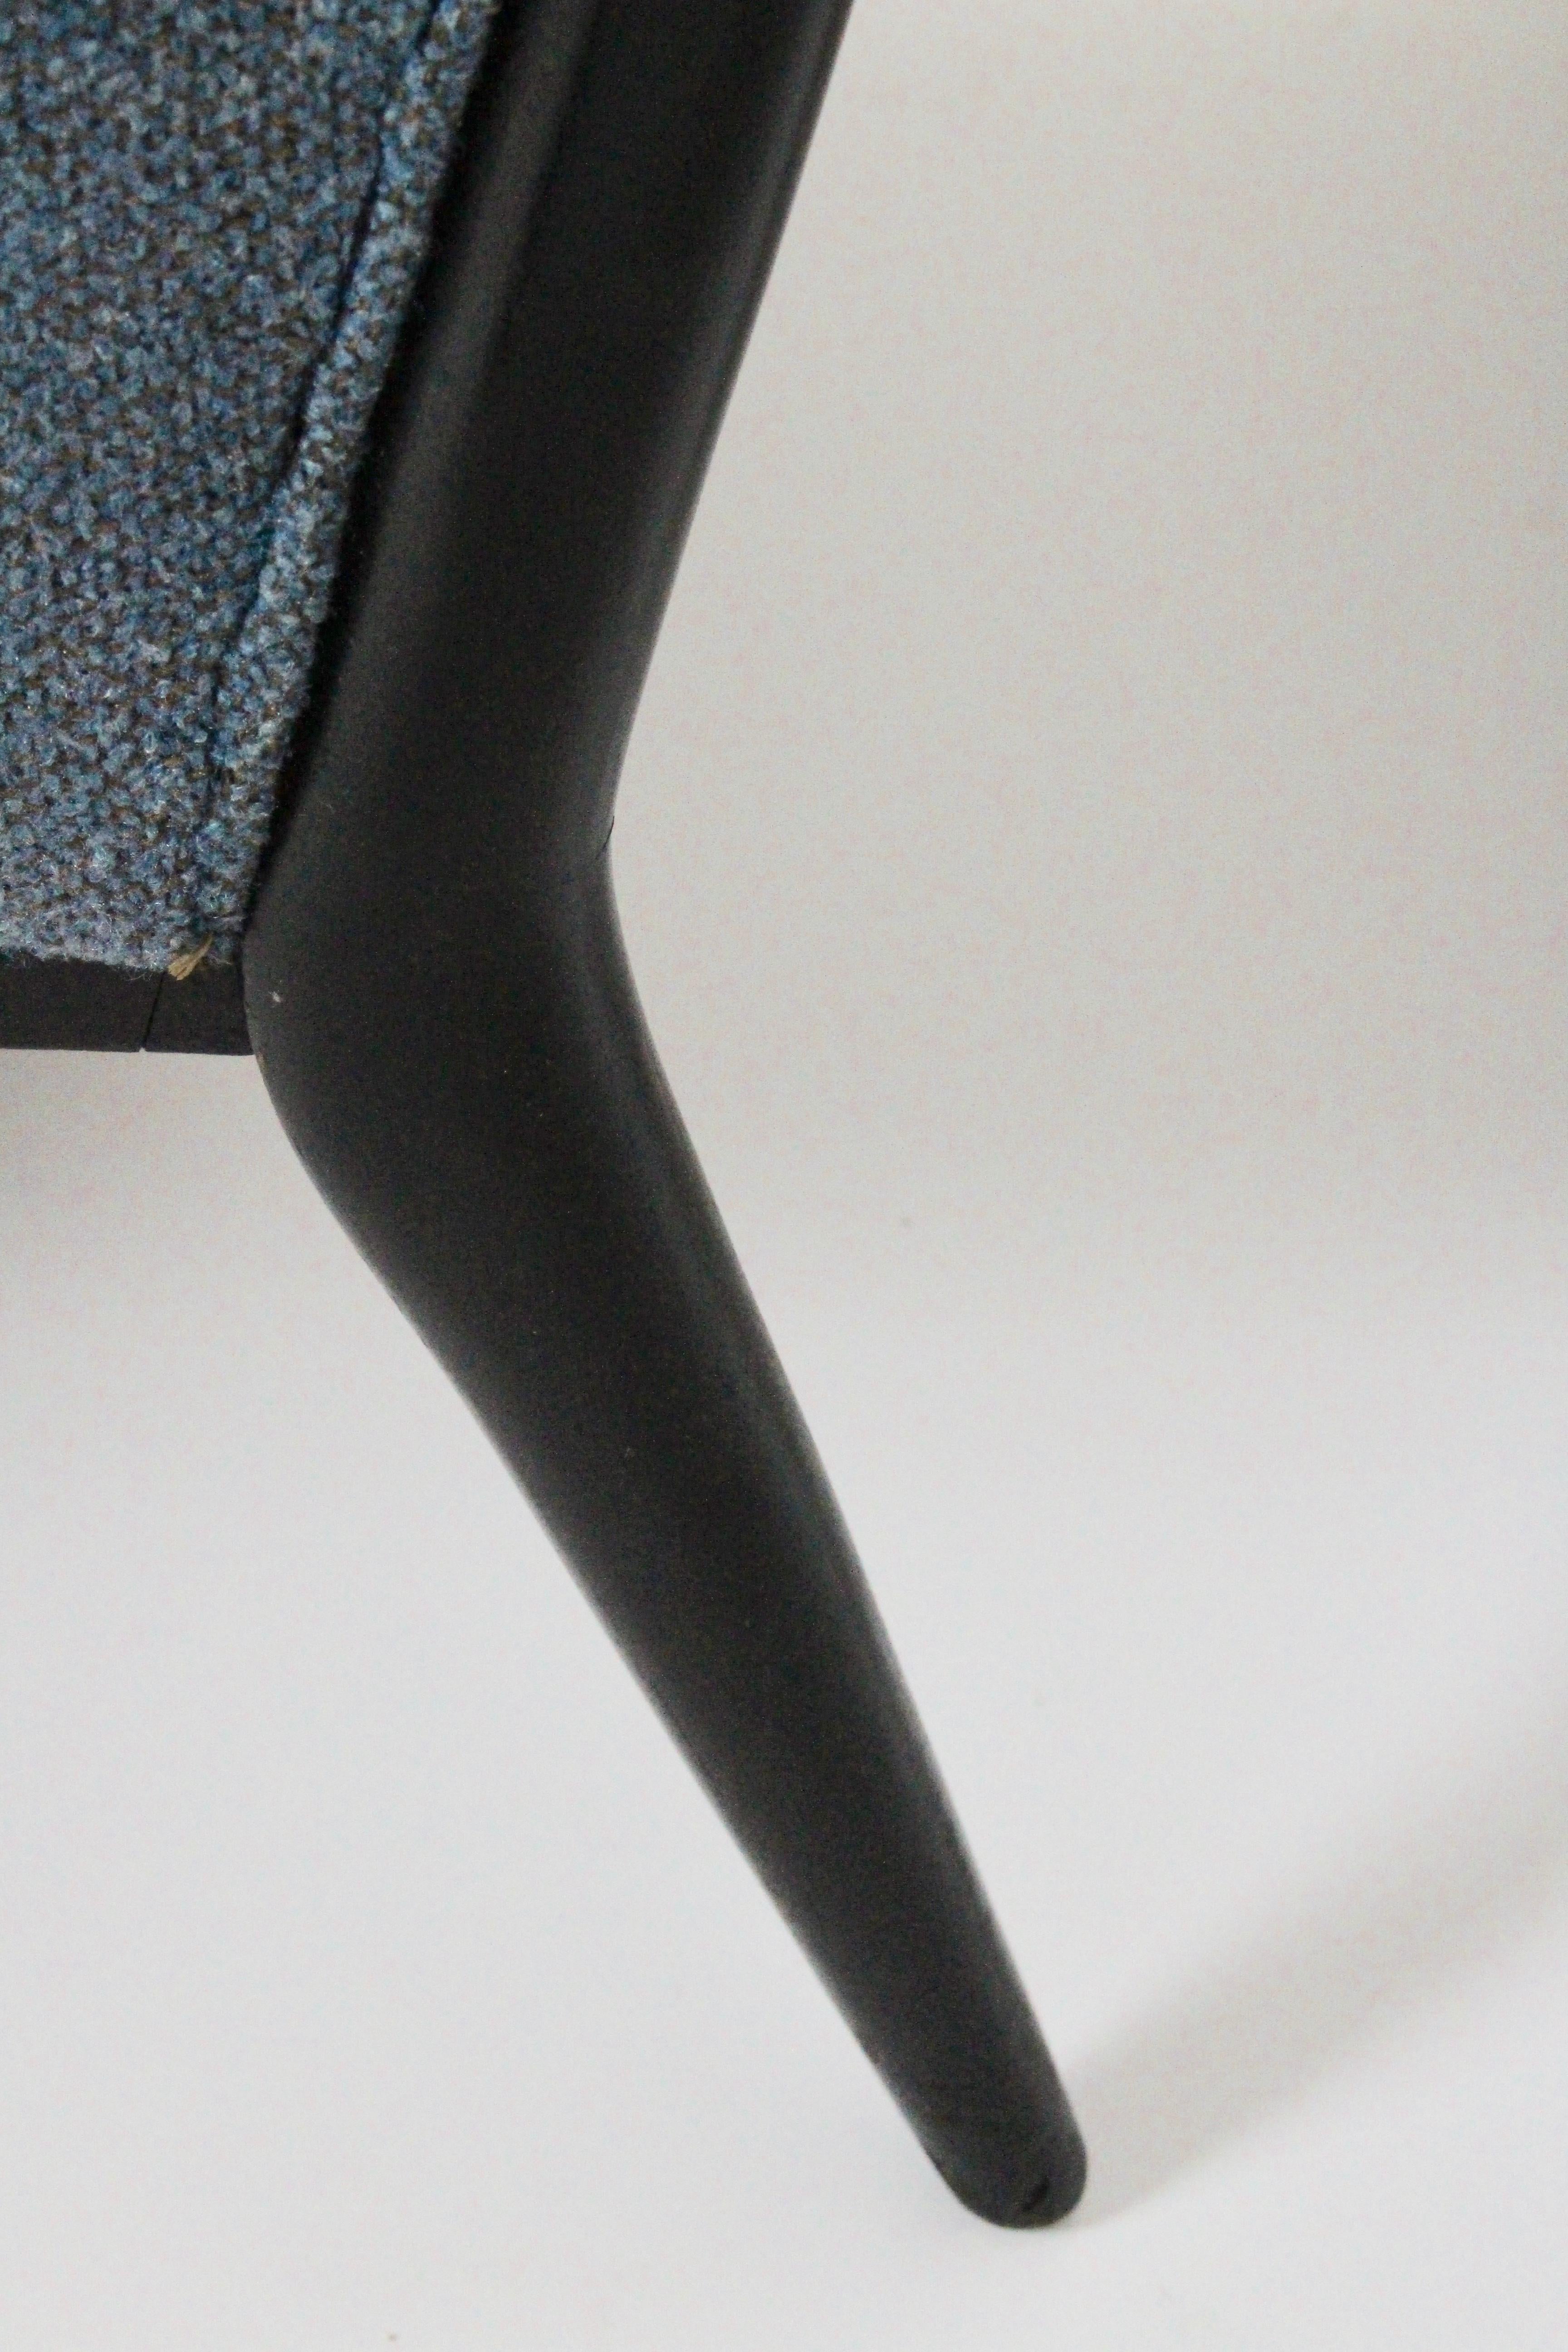 Paul McCobb for Directional Model 1322 Black Rim Lounge Chair For Sale 1